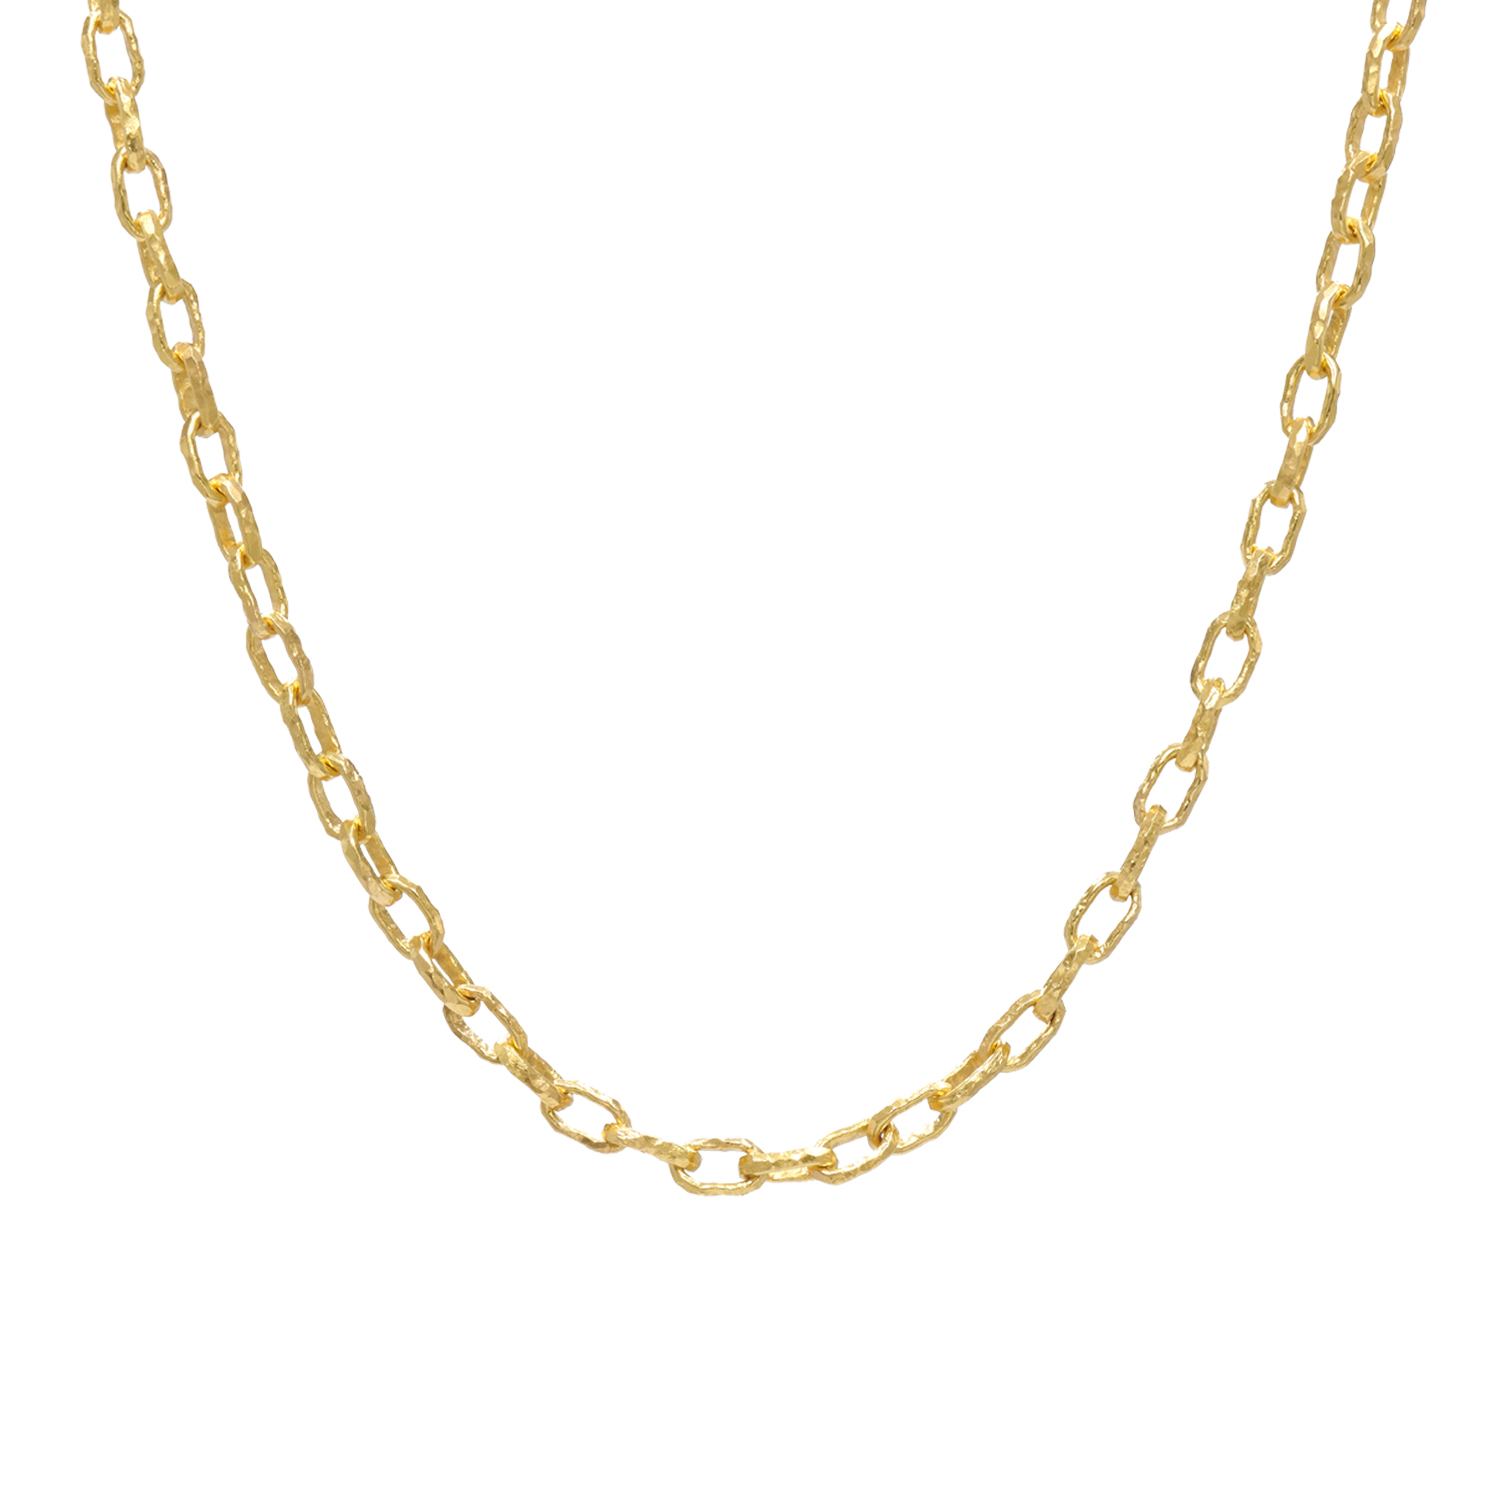 22K Yellow Gold “Cadene 15” Chain by Jean Mahie, Serial FL41832